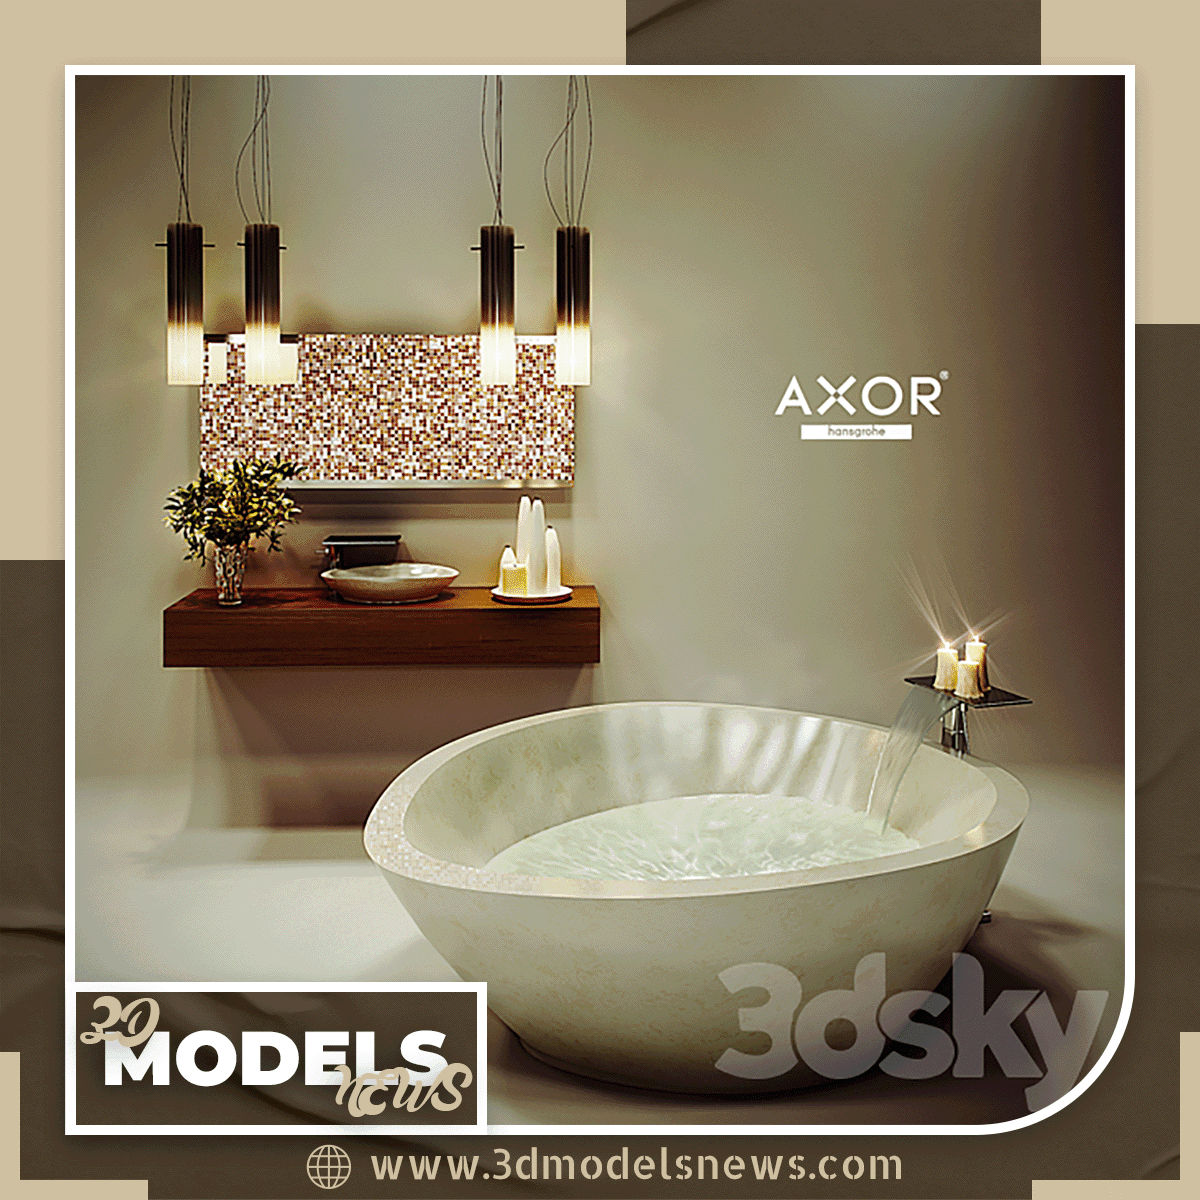 Axor Massaud and Trivia Bathroom Model